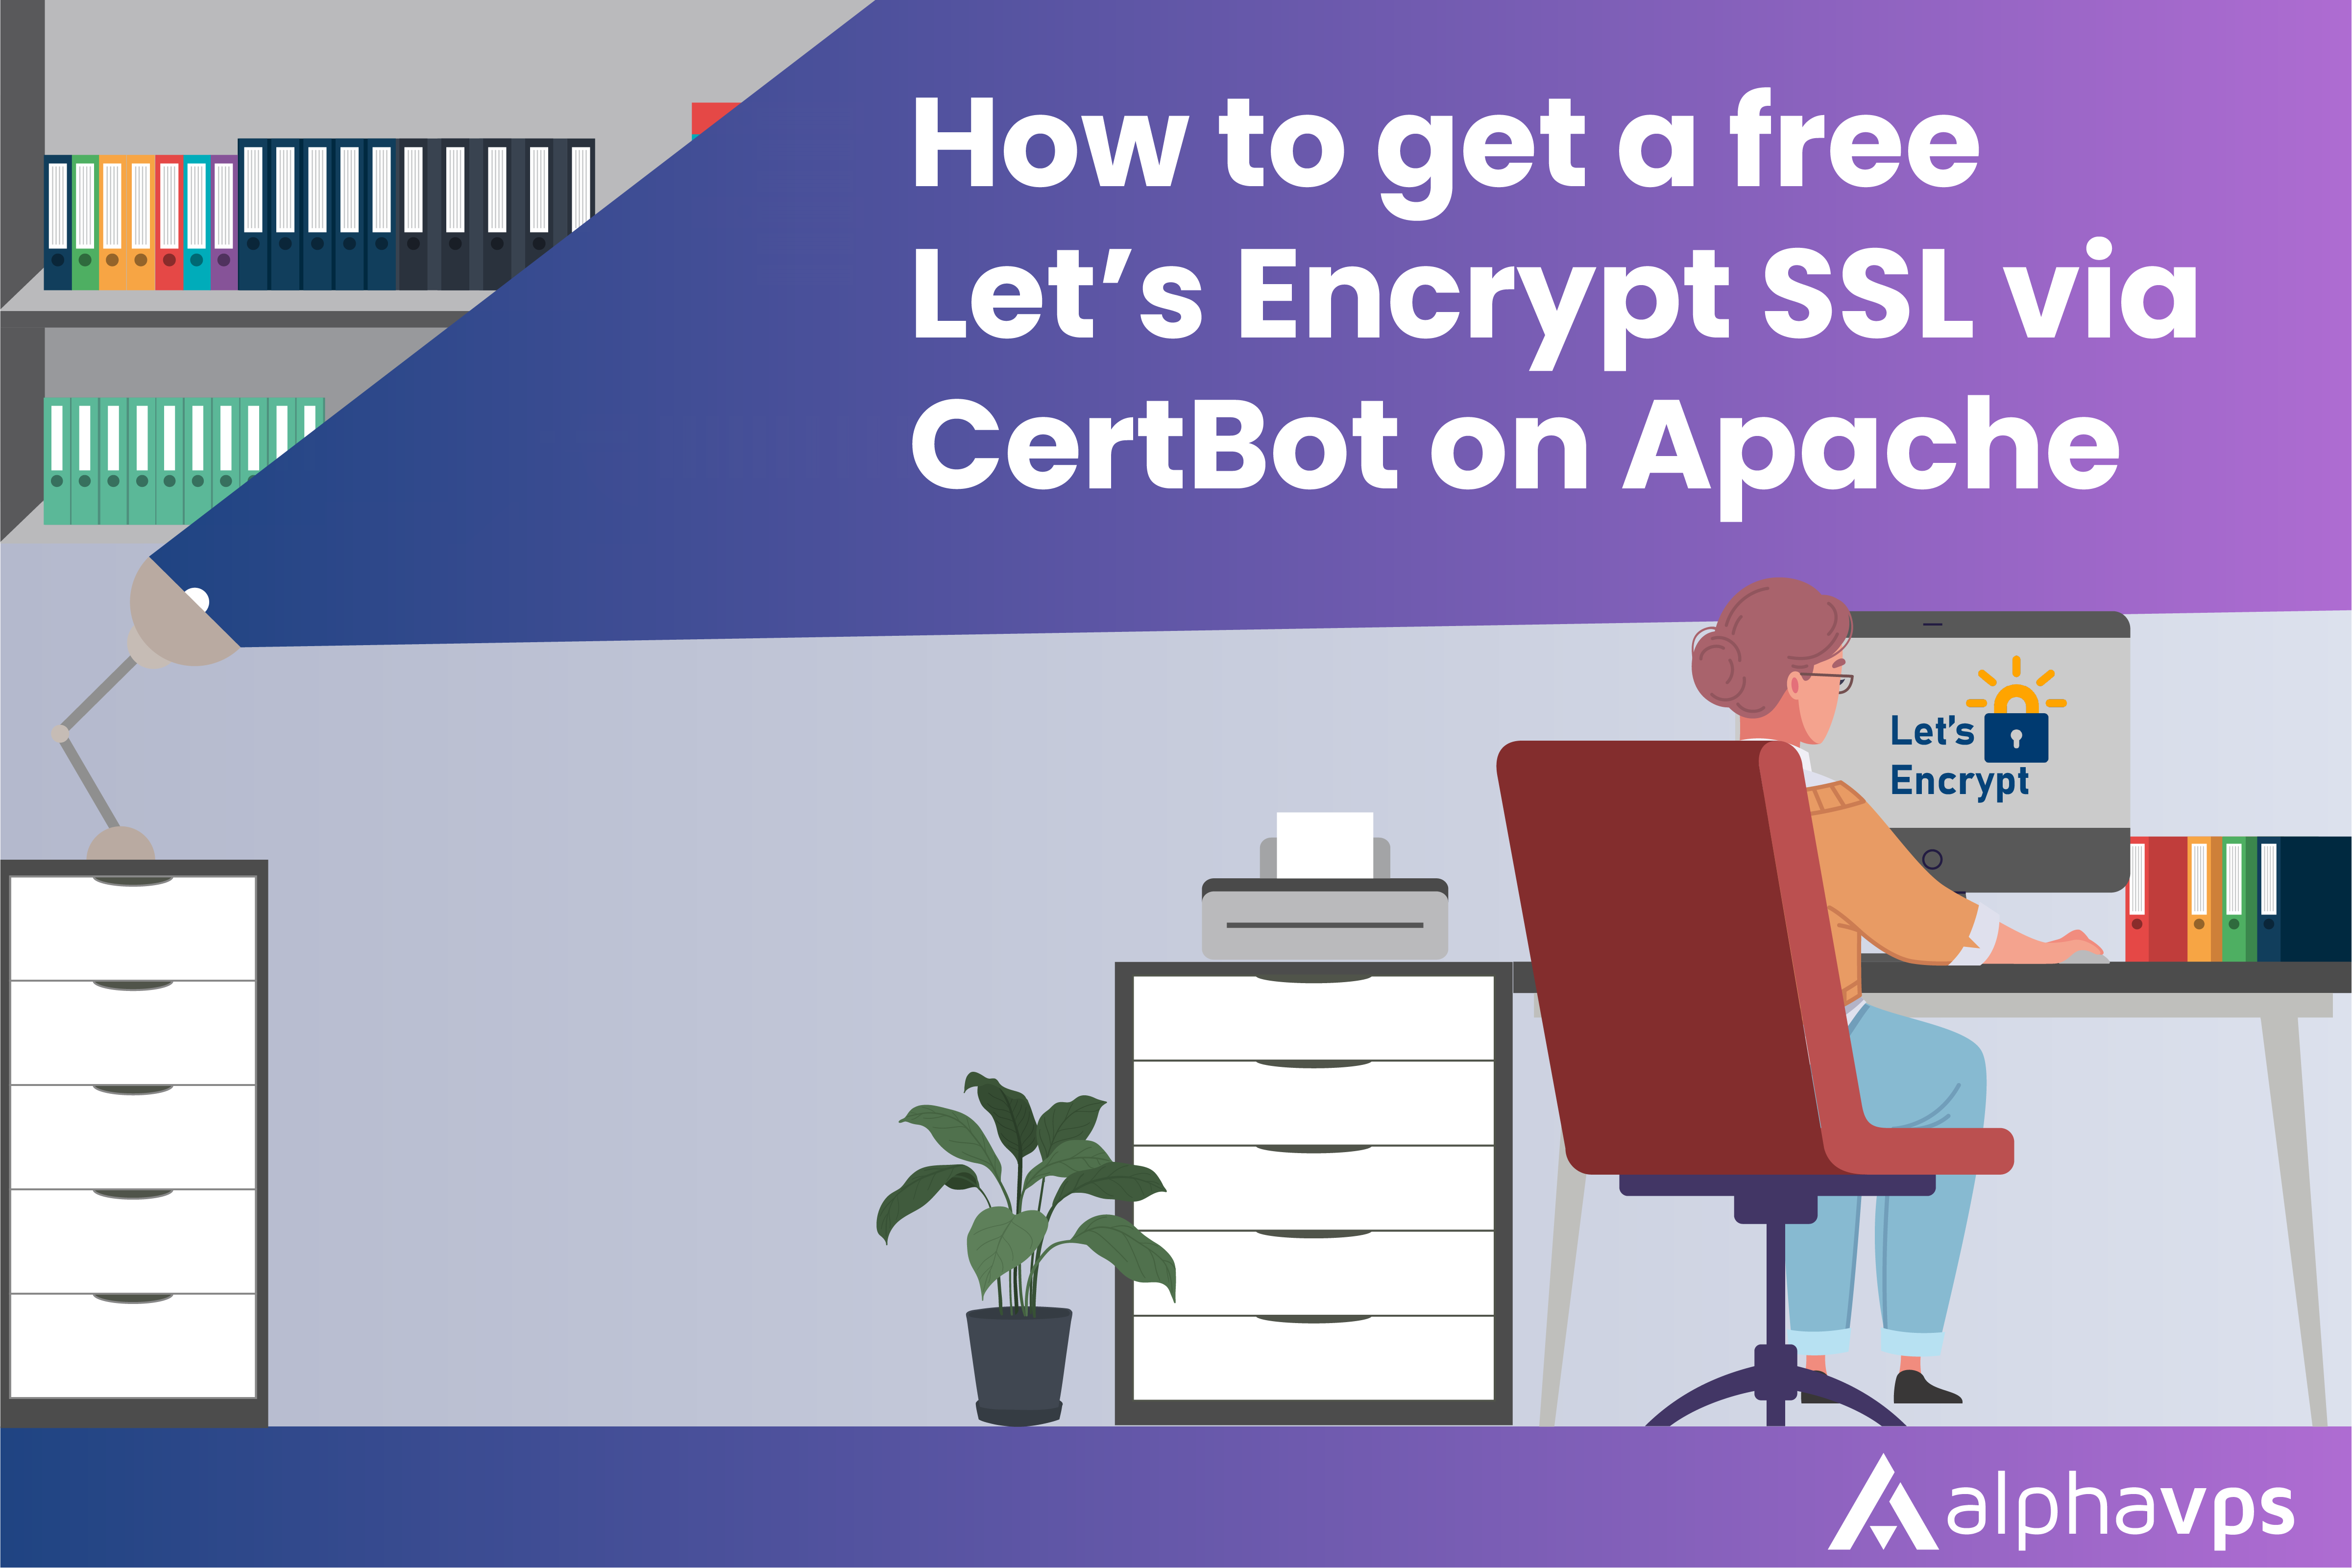 How to get a free Let's Encrypt SSL via CertBot on Apache